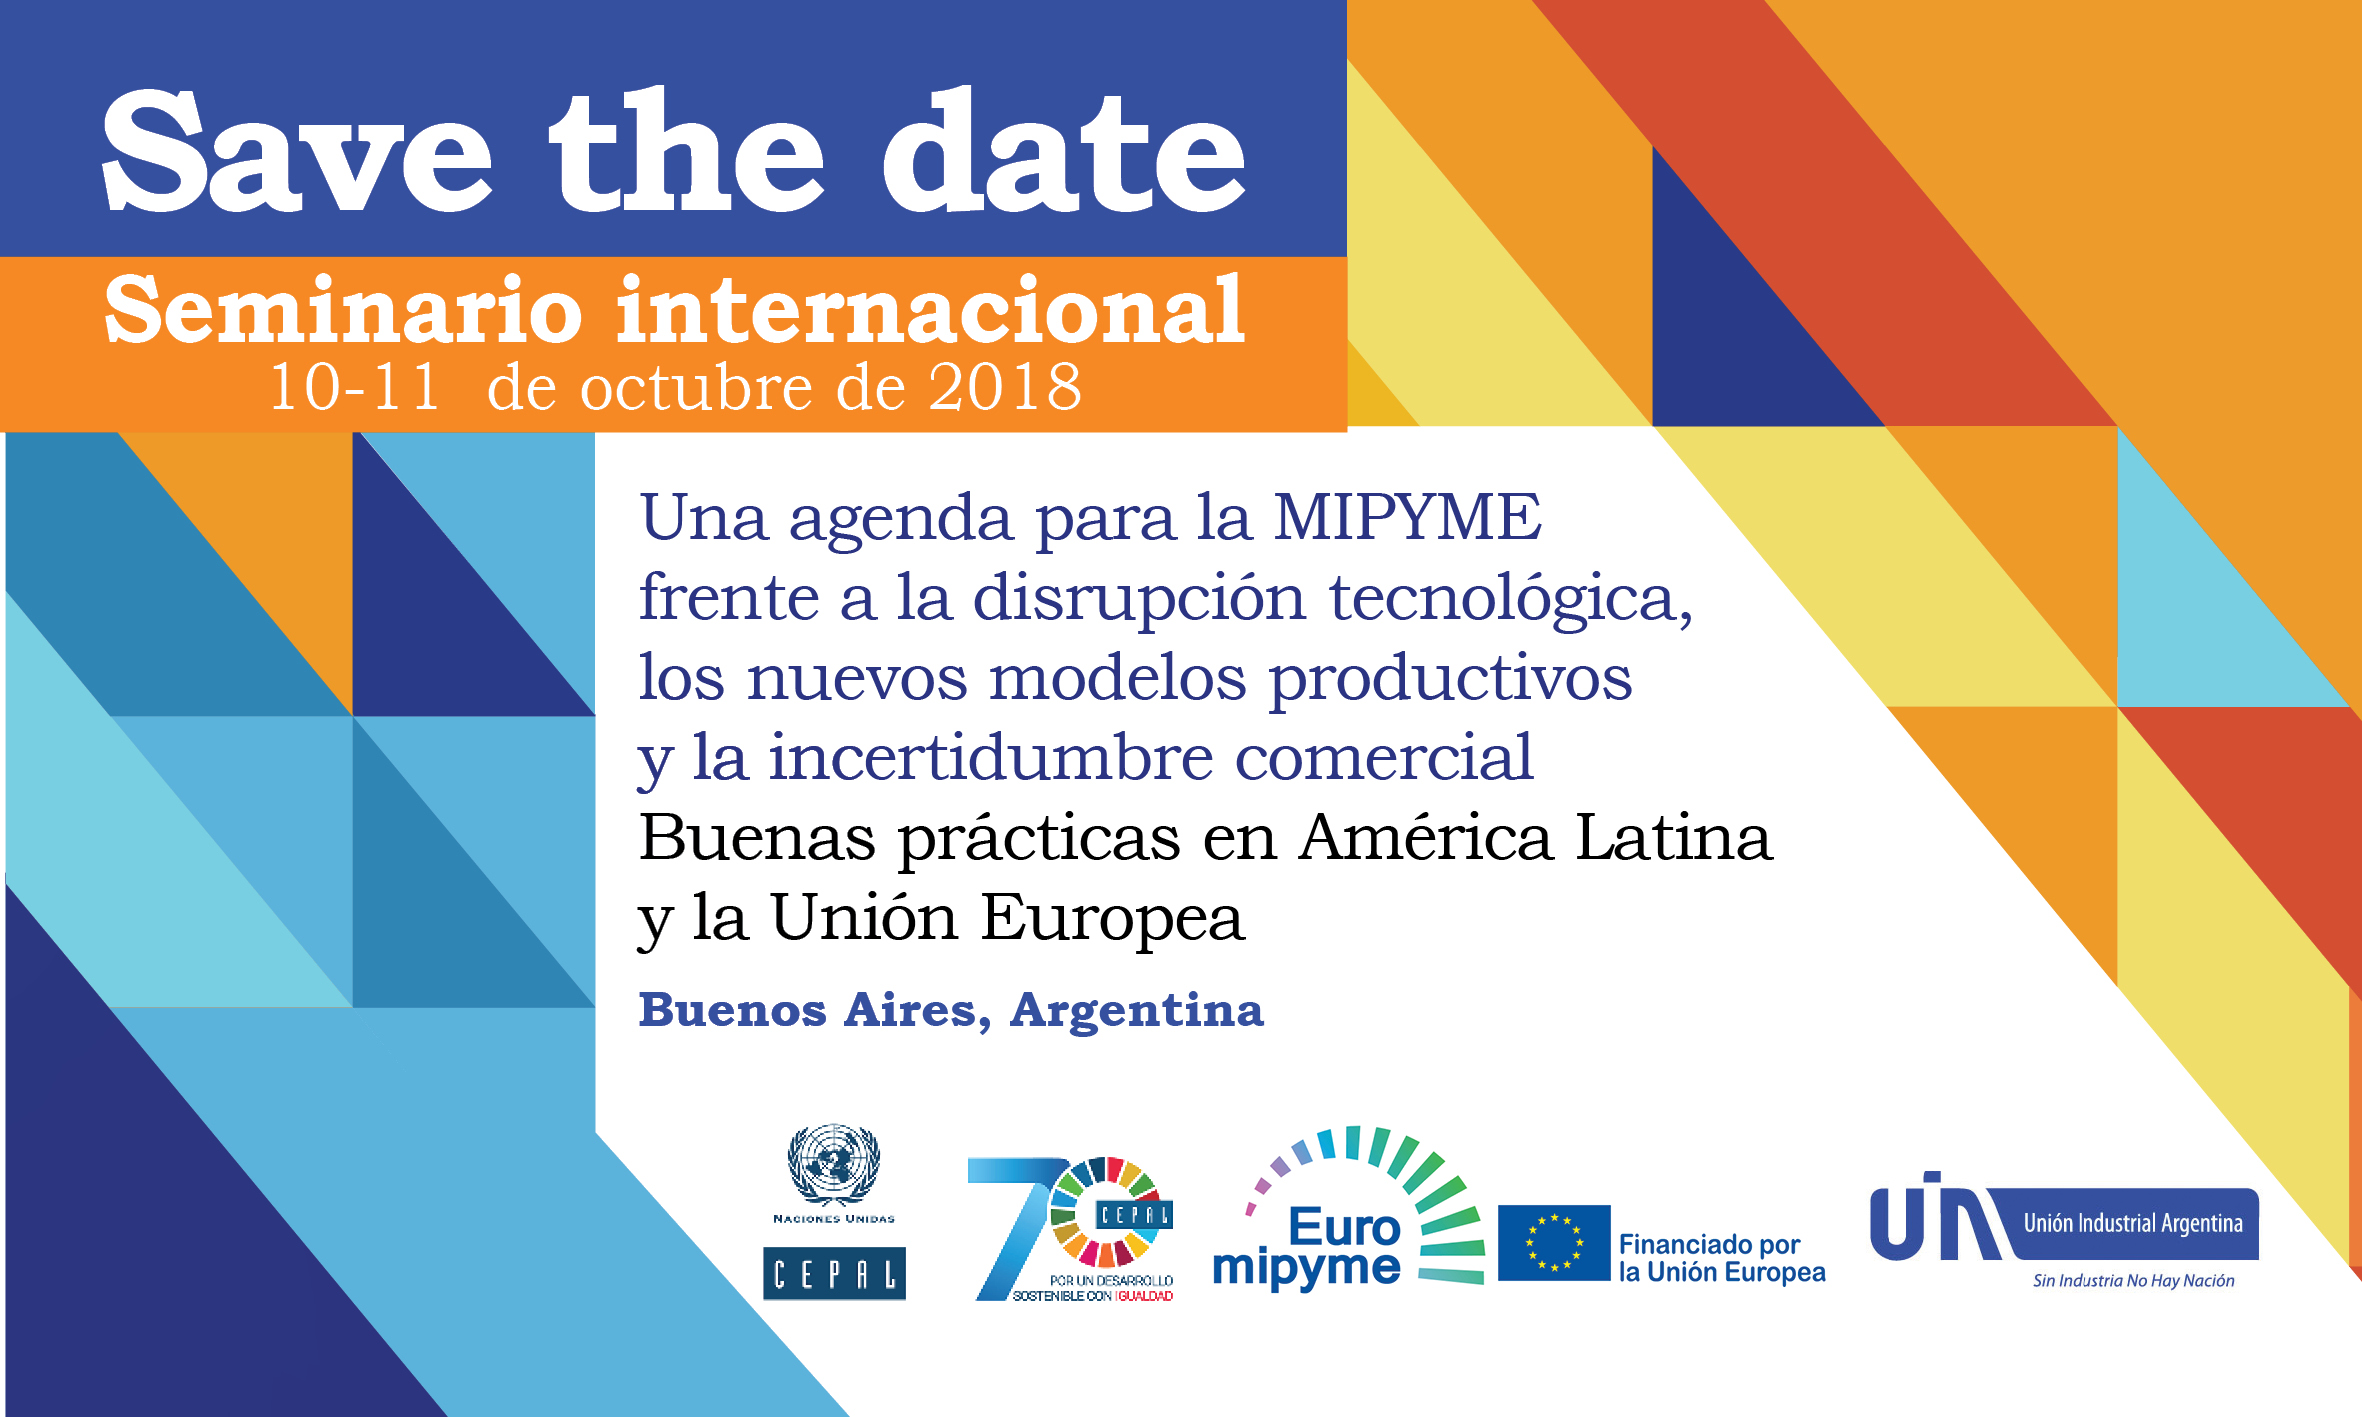 Save the date seminario MIPYME